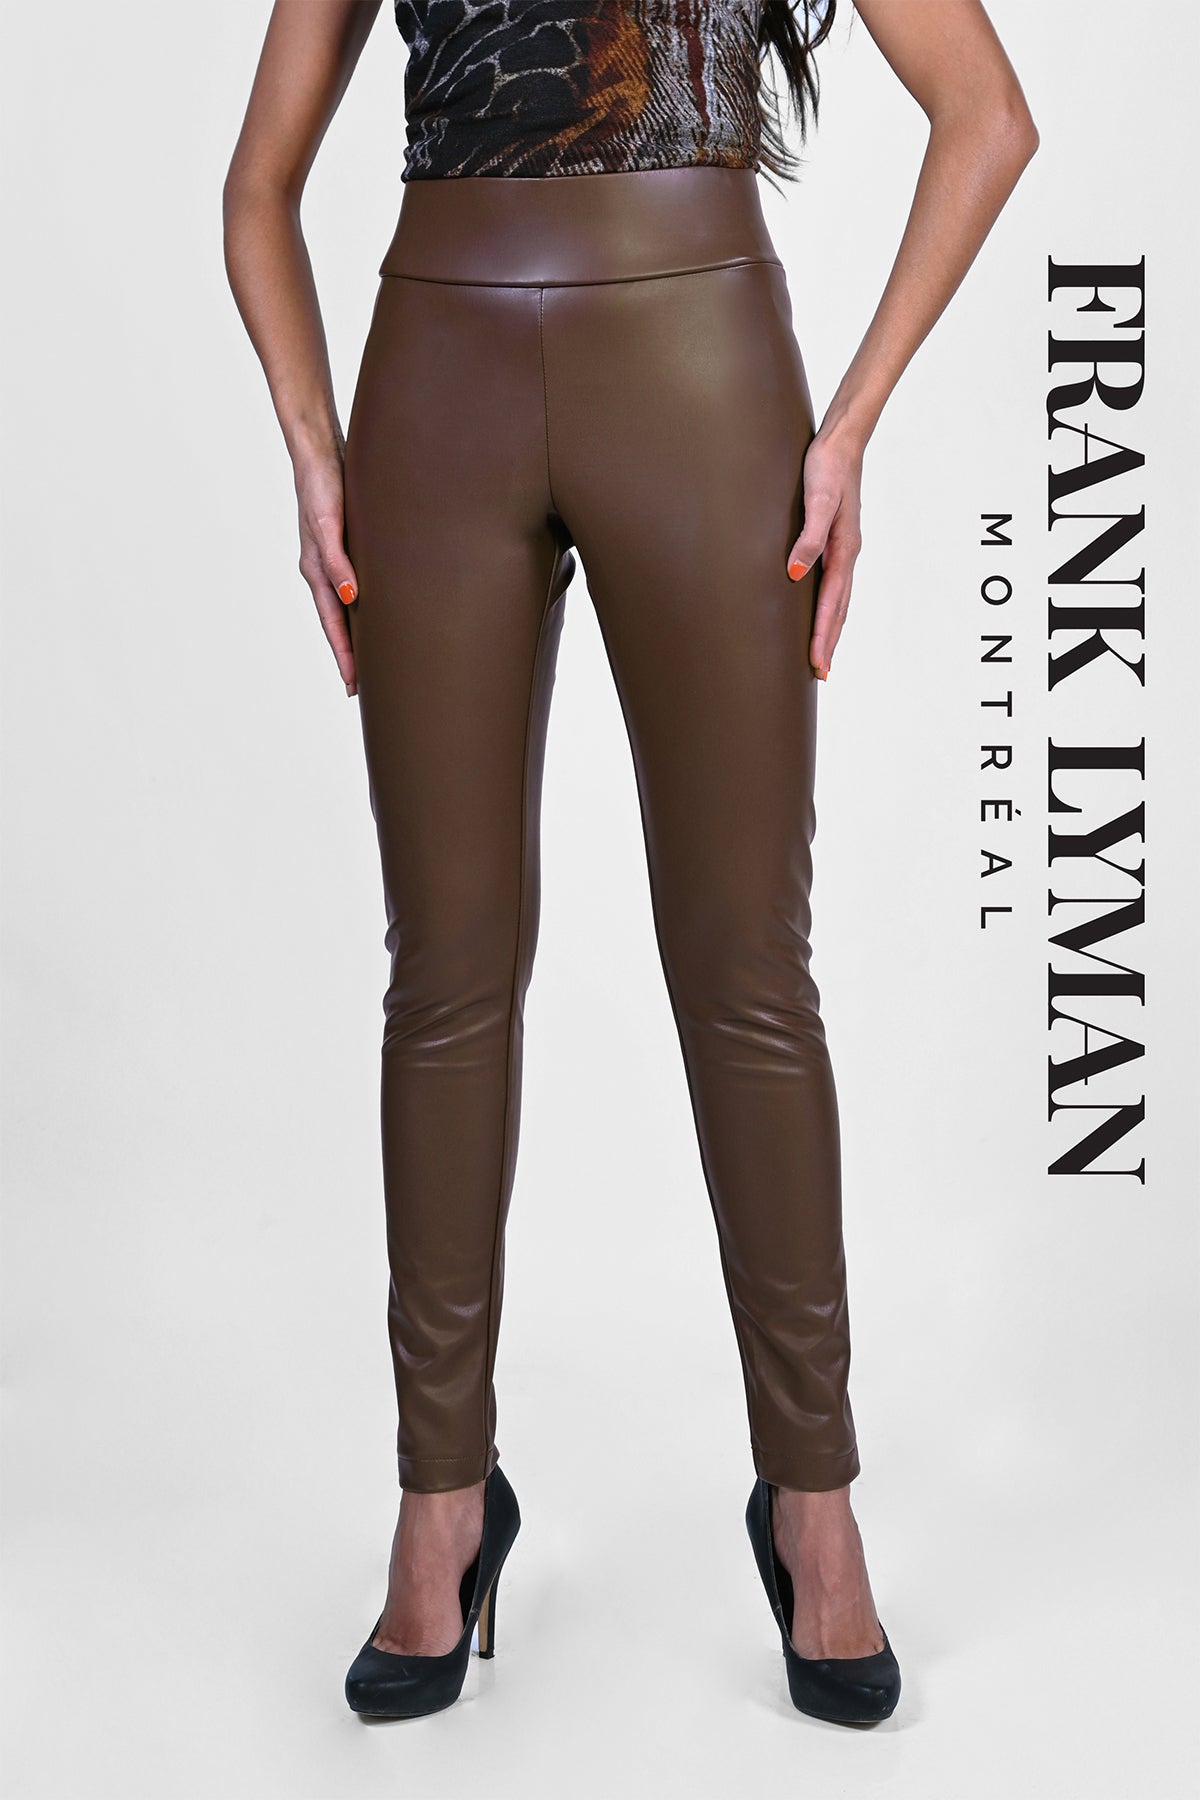 Frank Lyman Montreal Leather Pants-Buy Frank Lyman Montreal Clothing Online-Frank Lyman Montreal Brown Pants